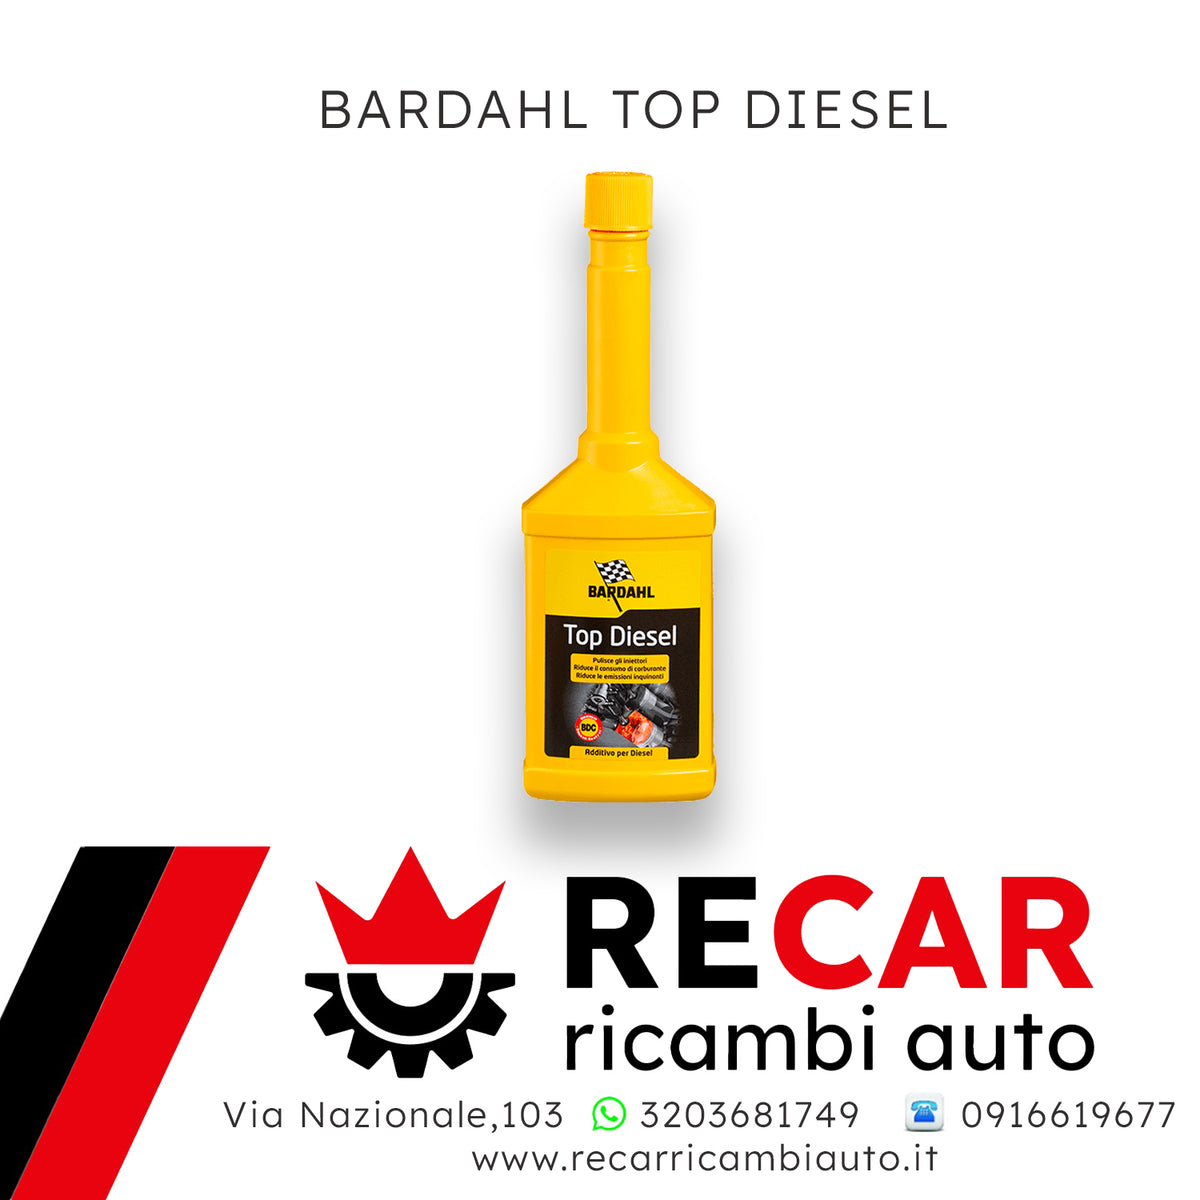 TOP DIESEL BARDAHL 250 ML – RECAR RICAMBI AUTO SRL